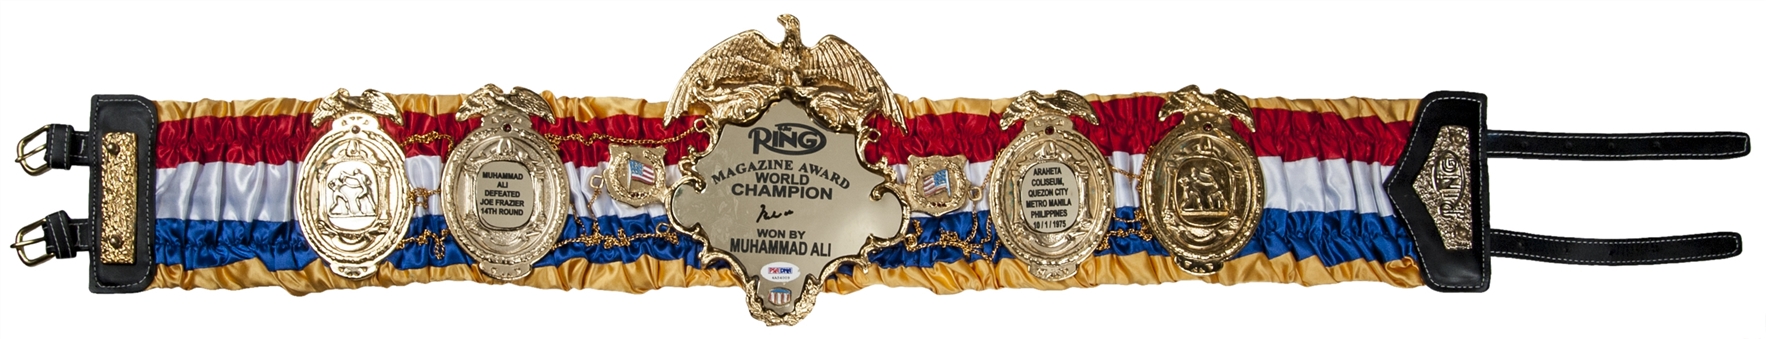 Muhammad Ali Signed Ring Magazine World Champion Award Belt (PSA/DNA Gem Mint 10))-"In The Presence " PSA